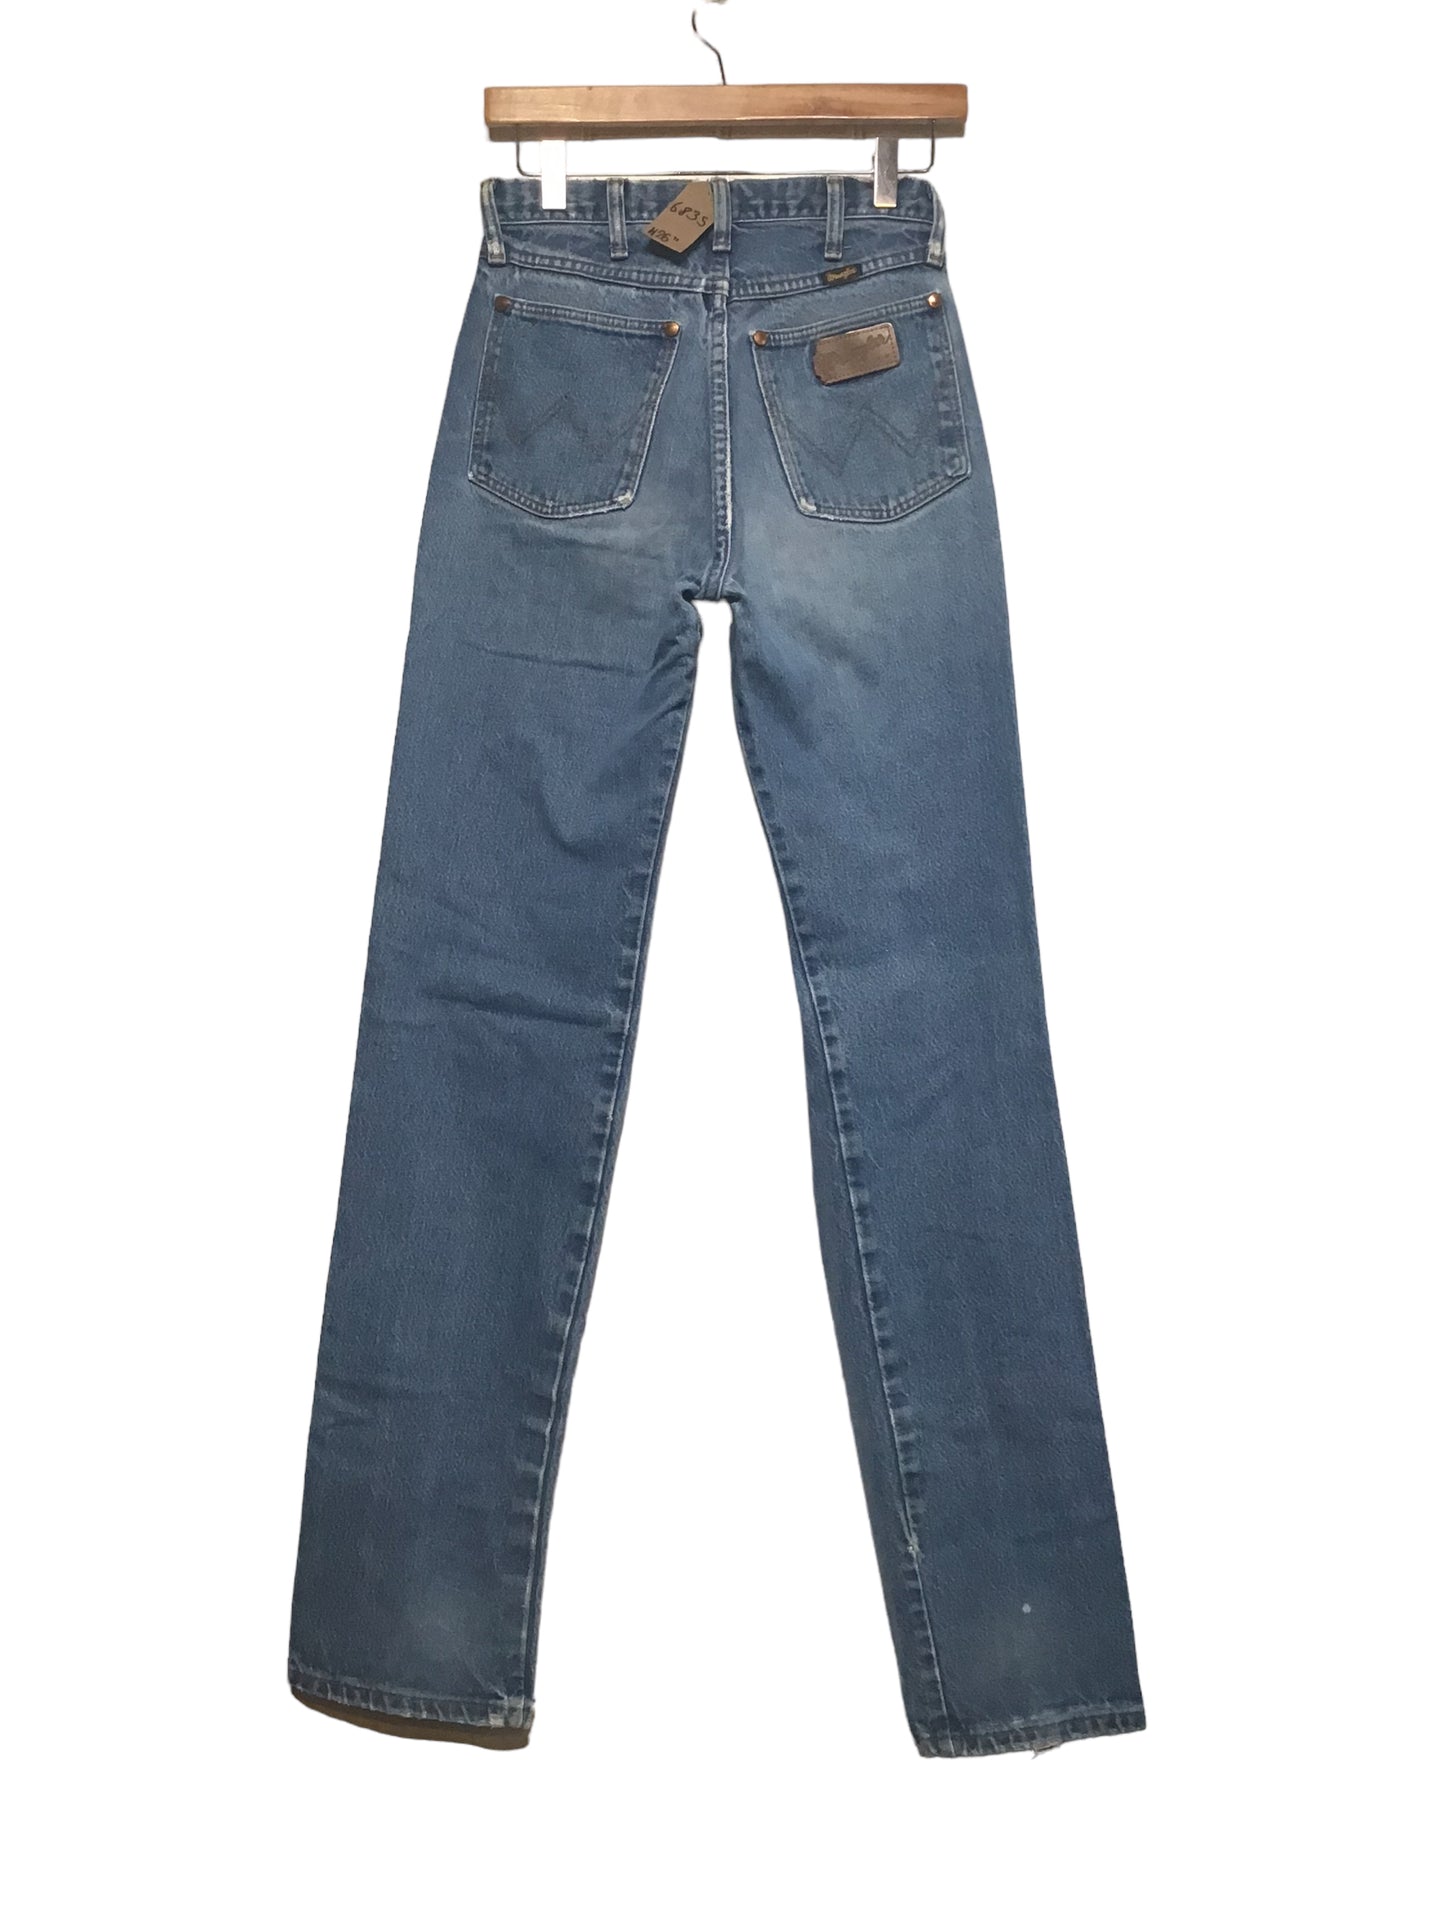 Wrangler Jeans (27x35)